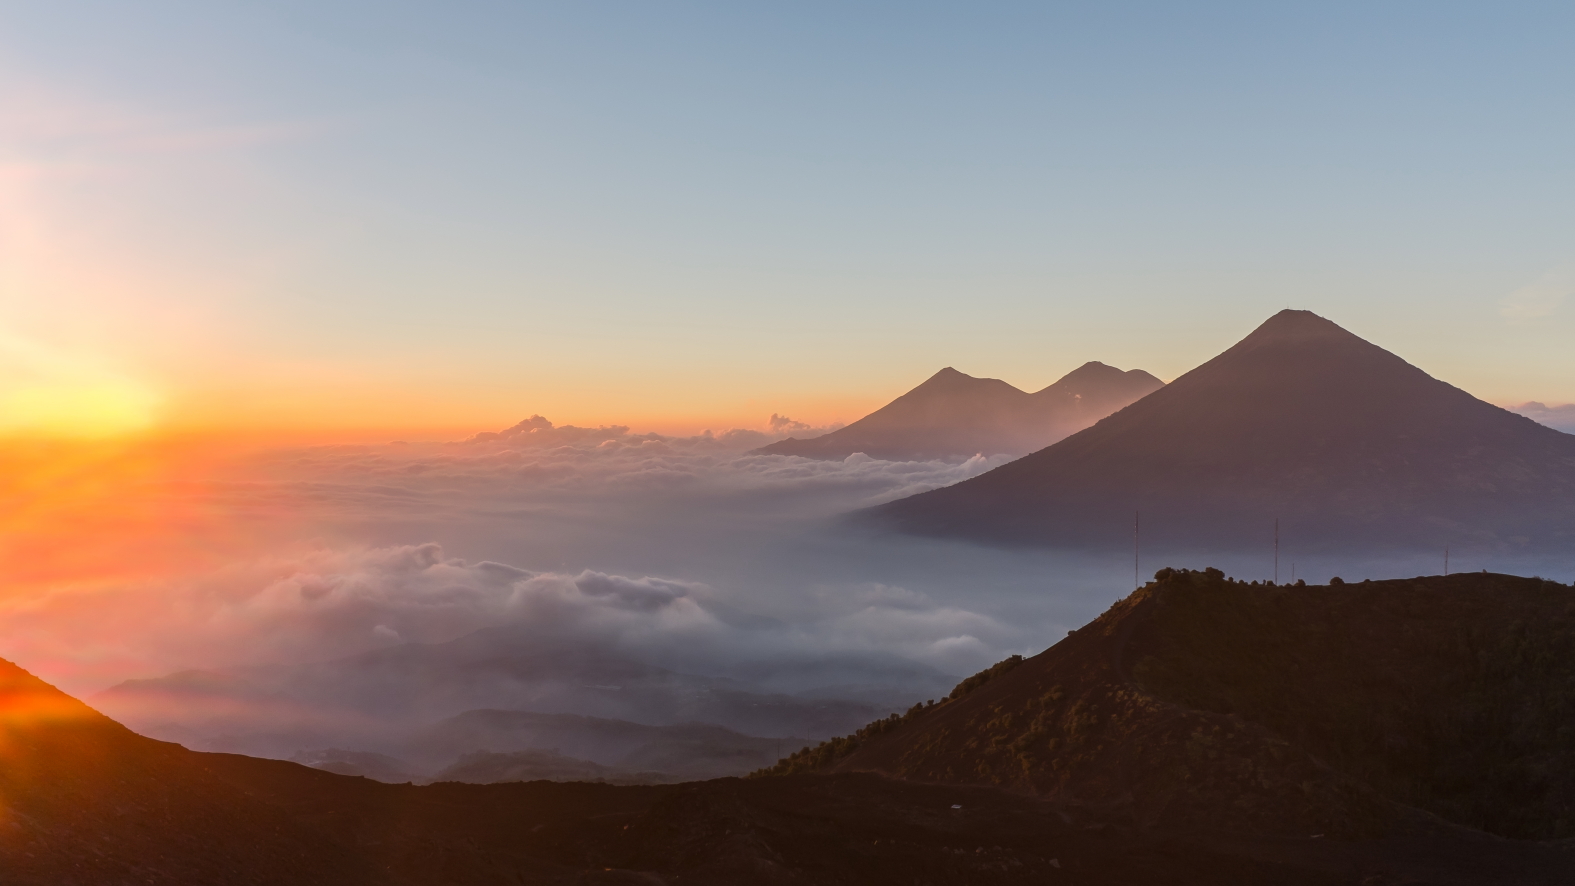 Volcan Acatenango and Volcan Fuego
View over volcanoes Acatenango and Agua - © Flickr user Christopher Crouzet